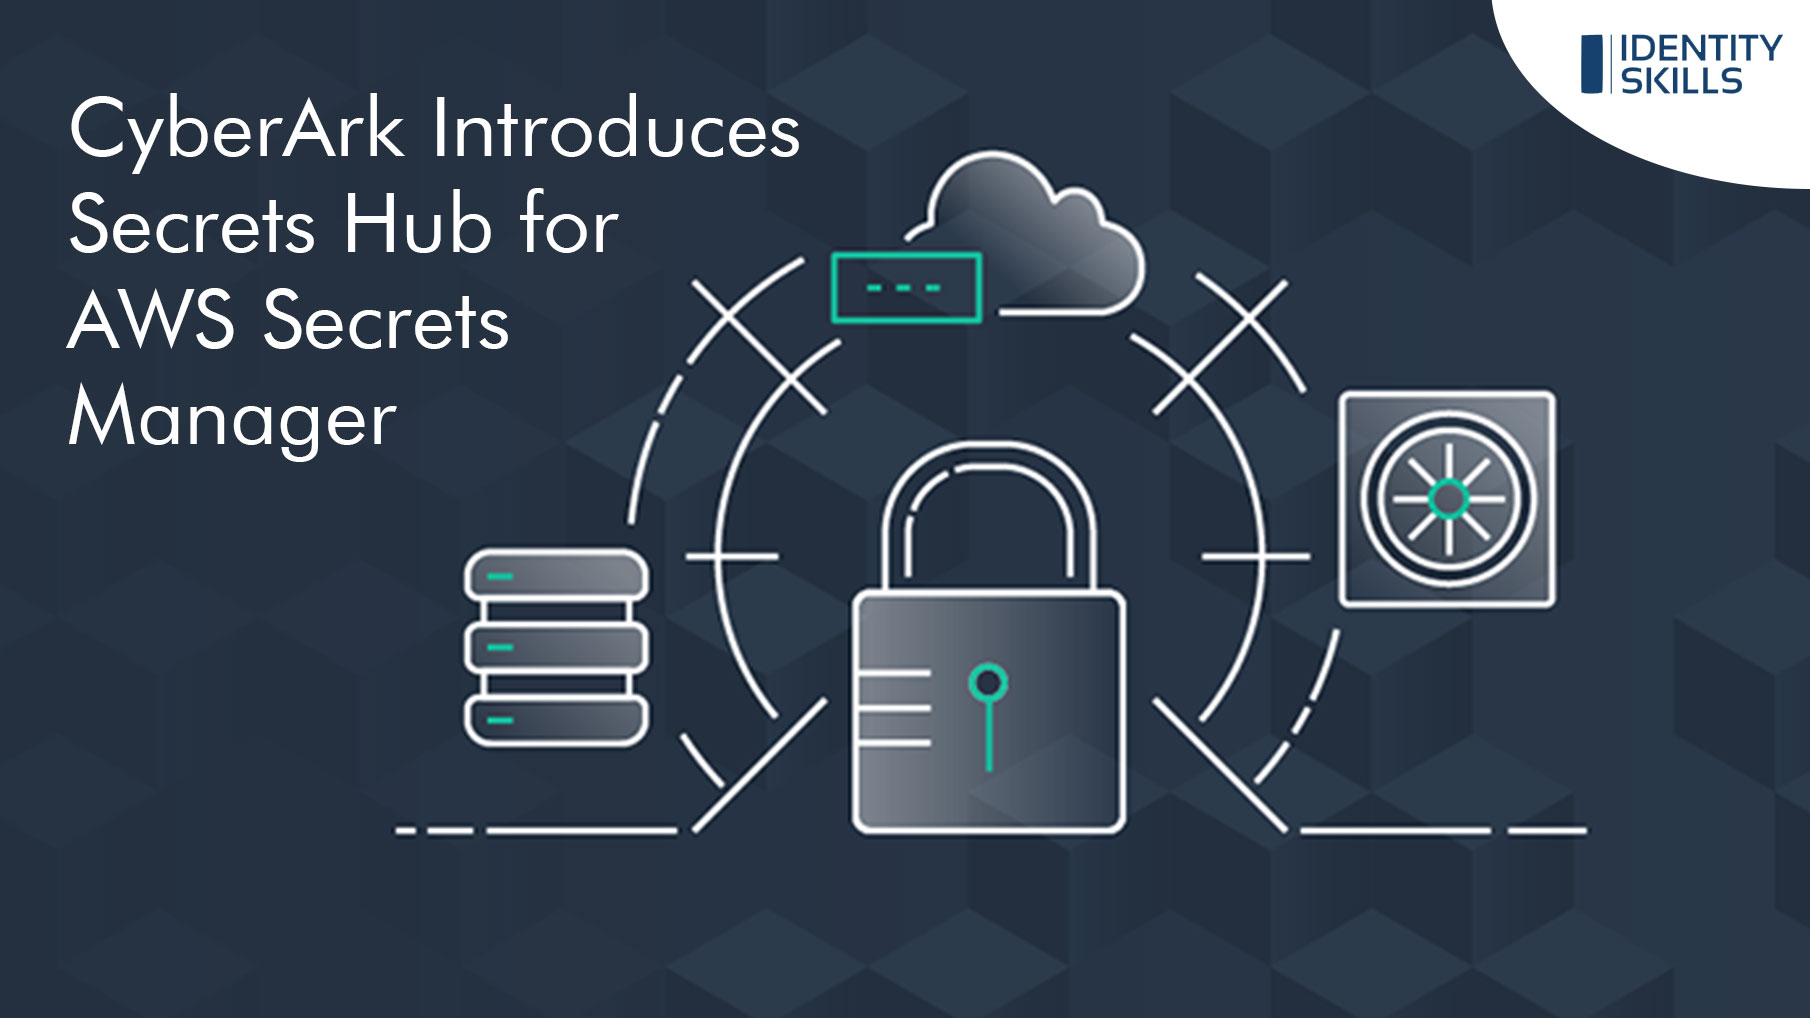 CyberArk Introduces Secrets Hub for AWS Secrets Manager